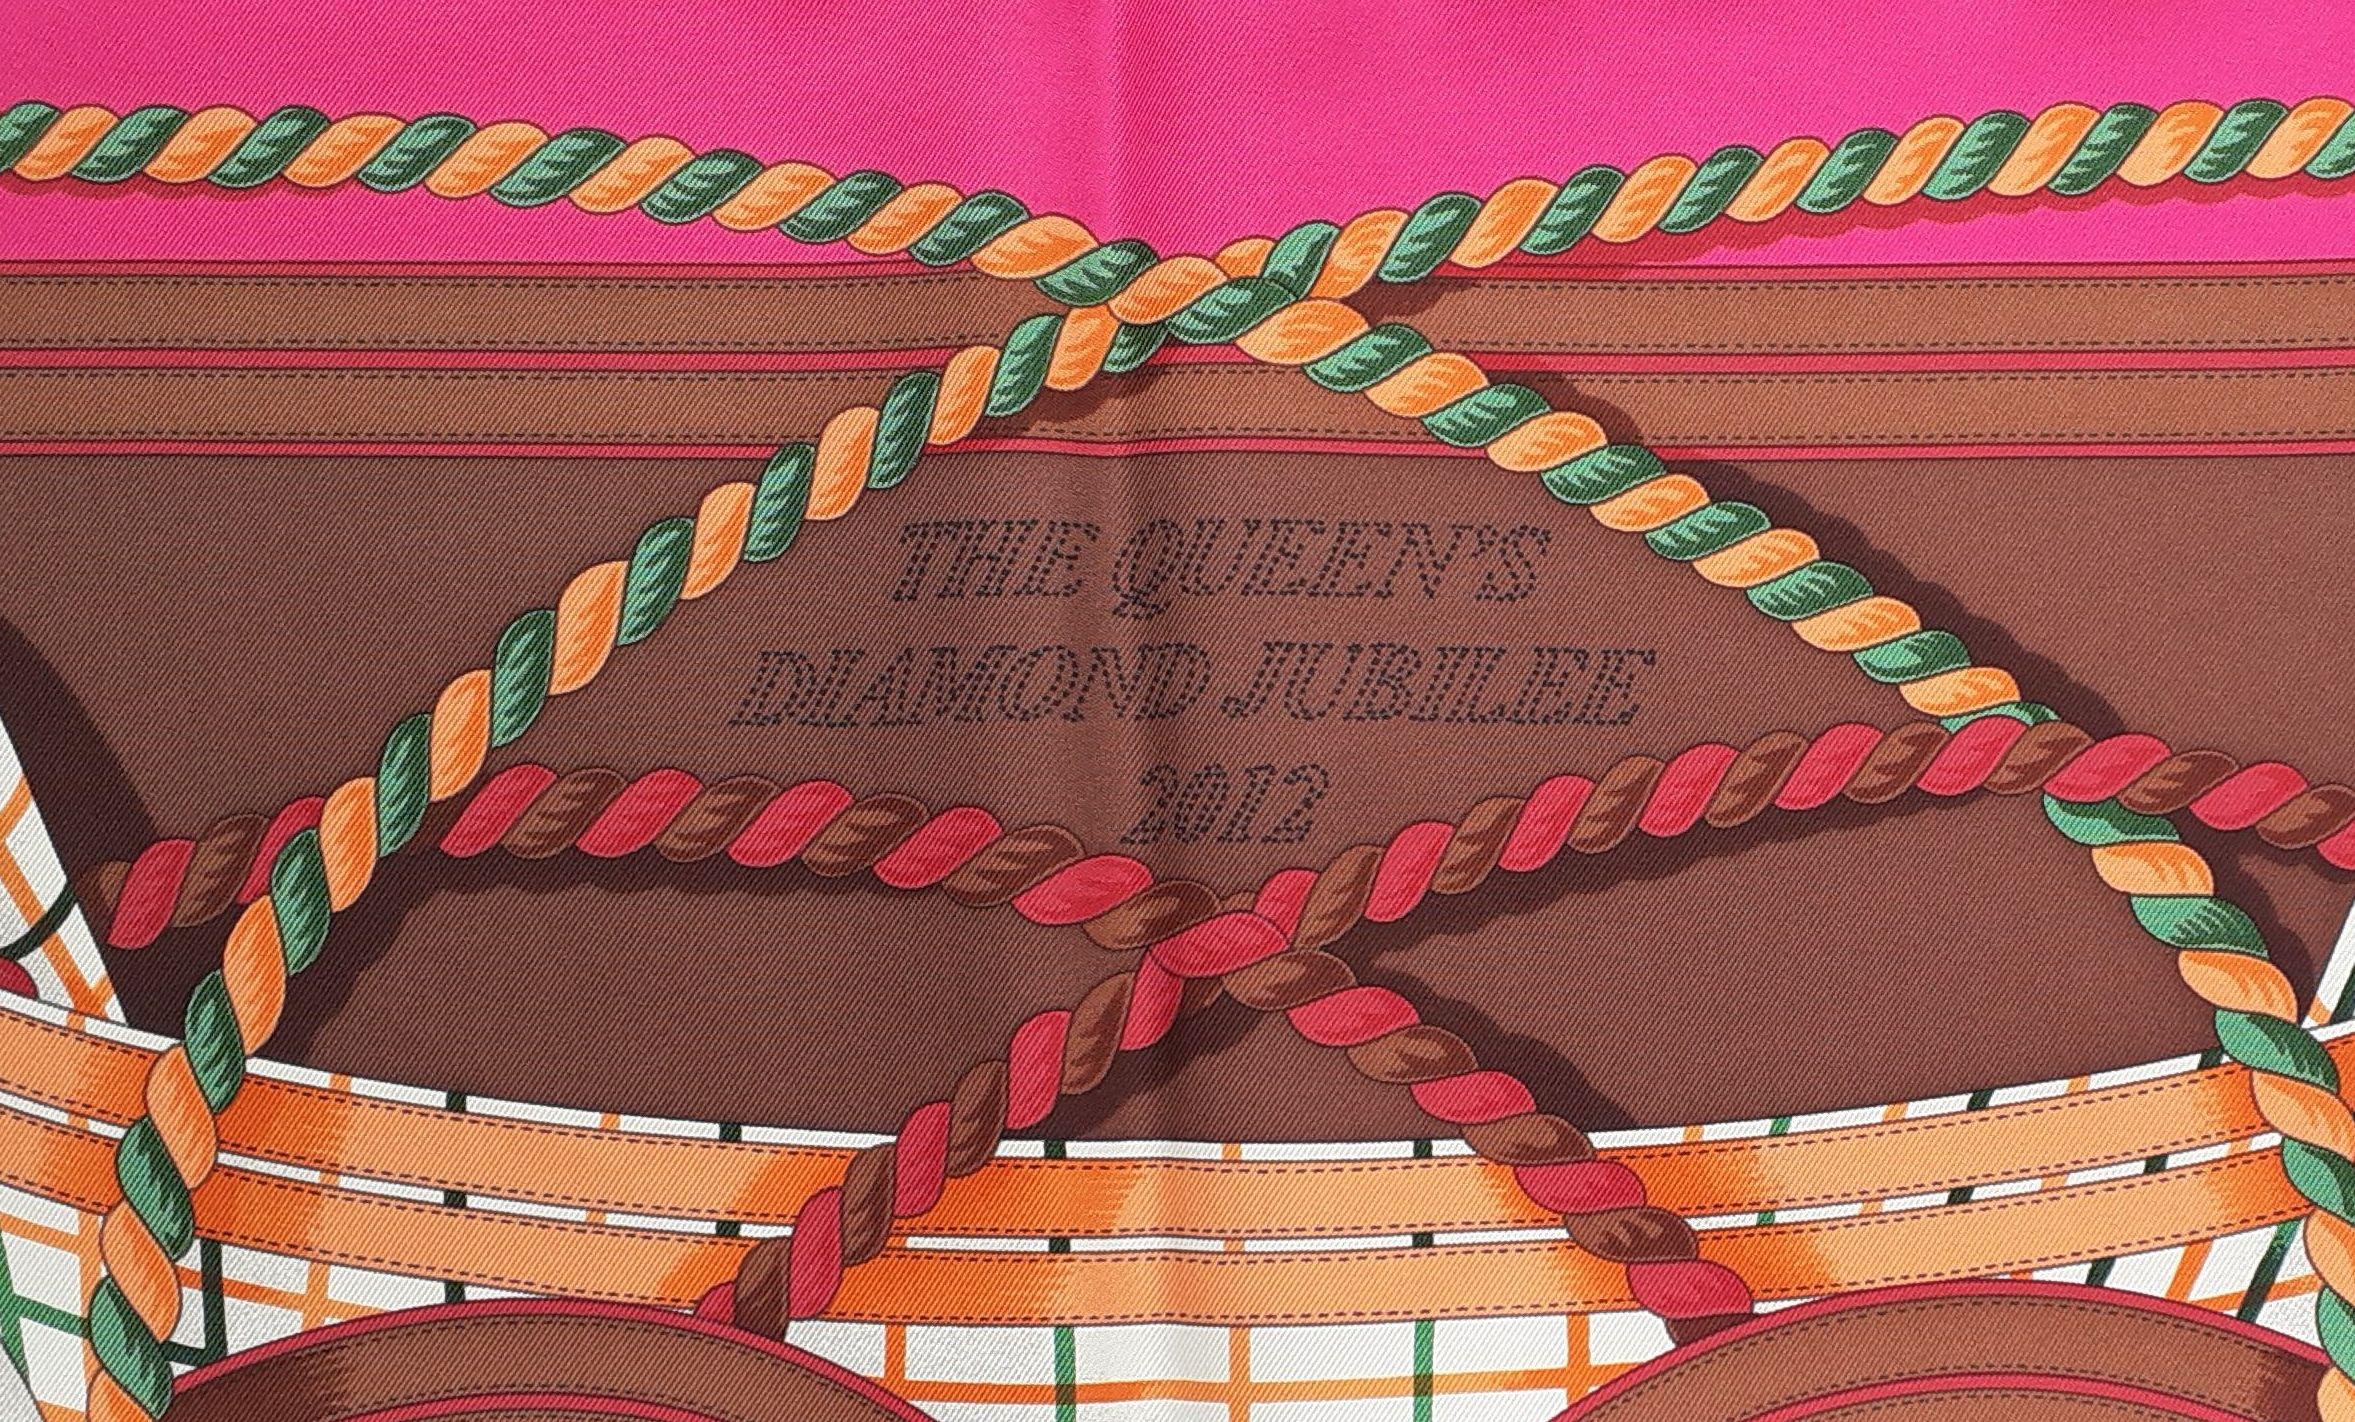 Hermès Scarf Grande Tenue The Queen's Diamond Jubilee 2012 90 cm COLLECTOR  For Sale 2